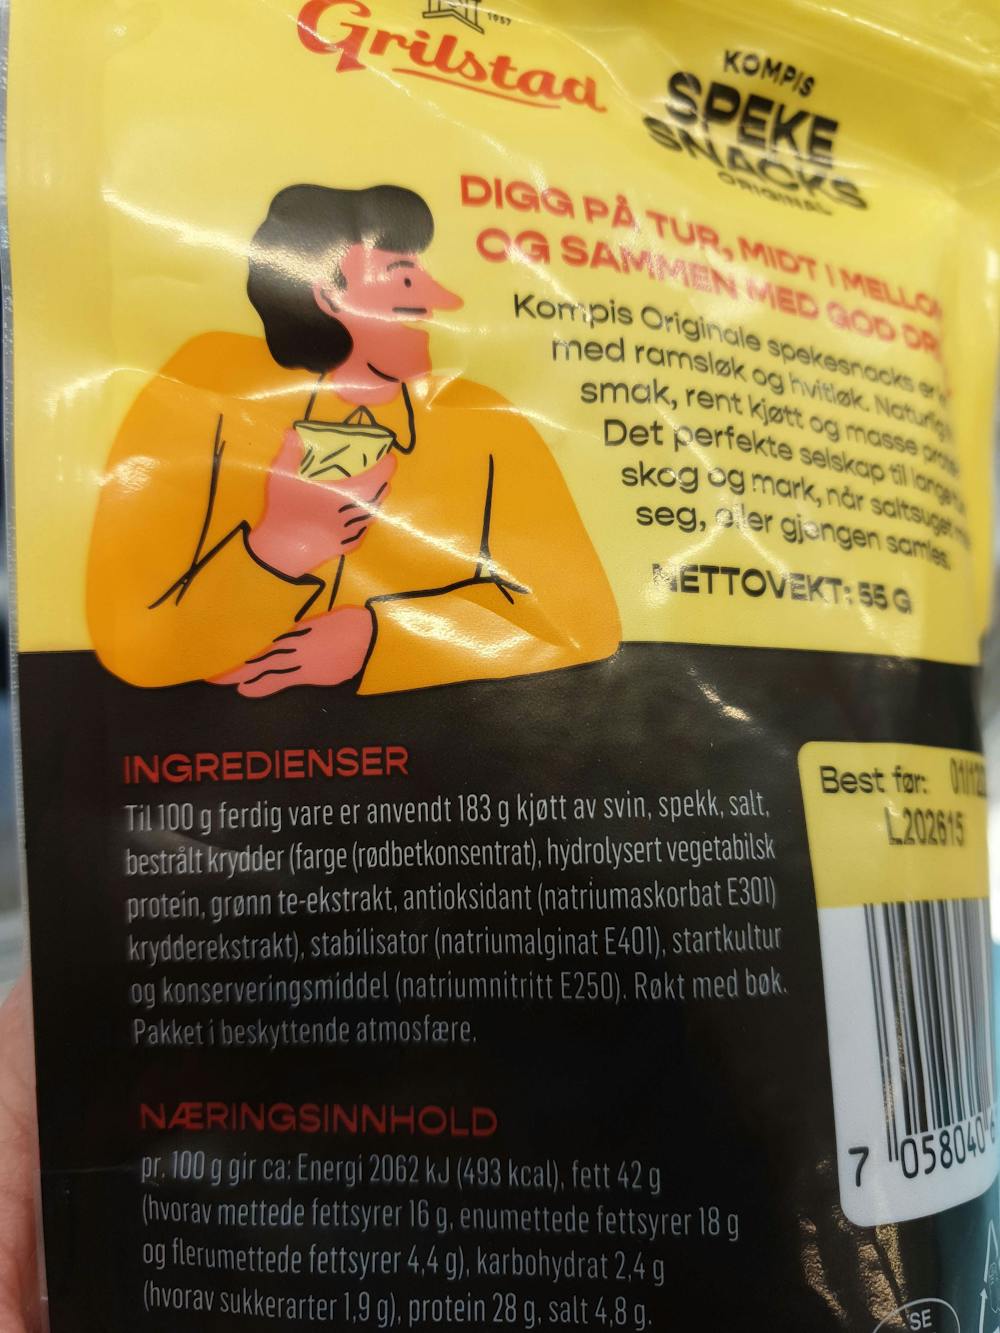 Ingredienslisten til Grilstad Kompis spekesnacks orginal